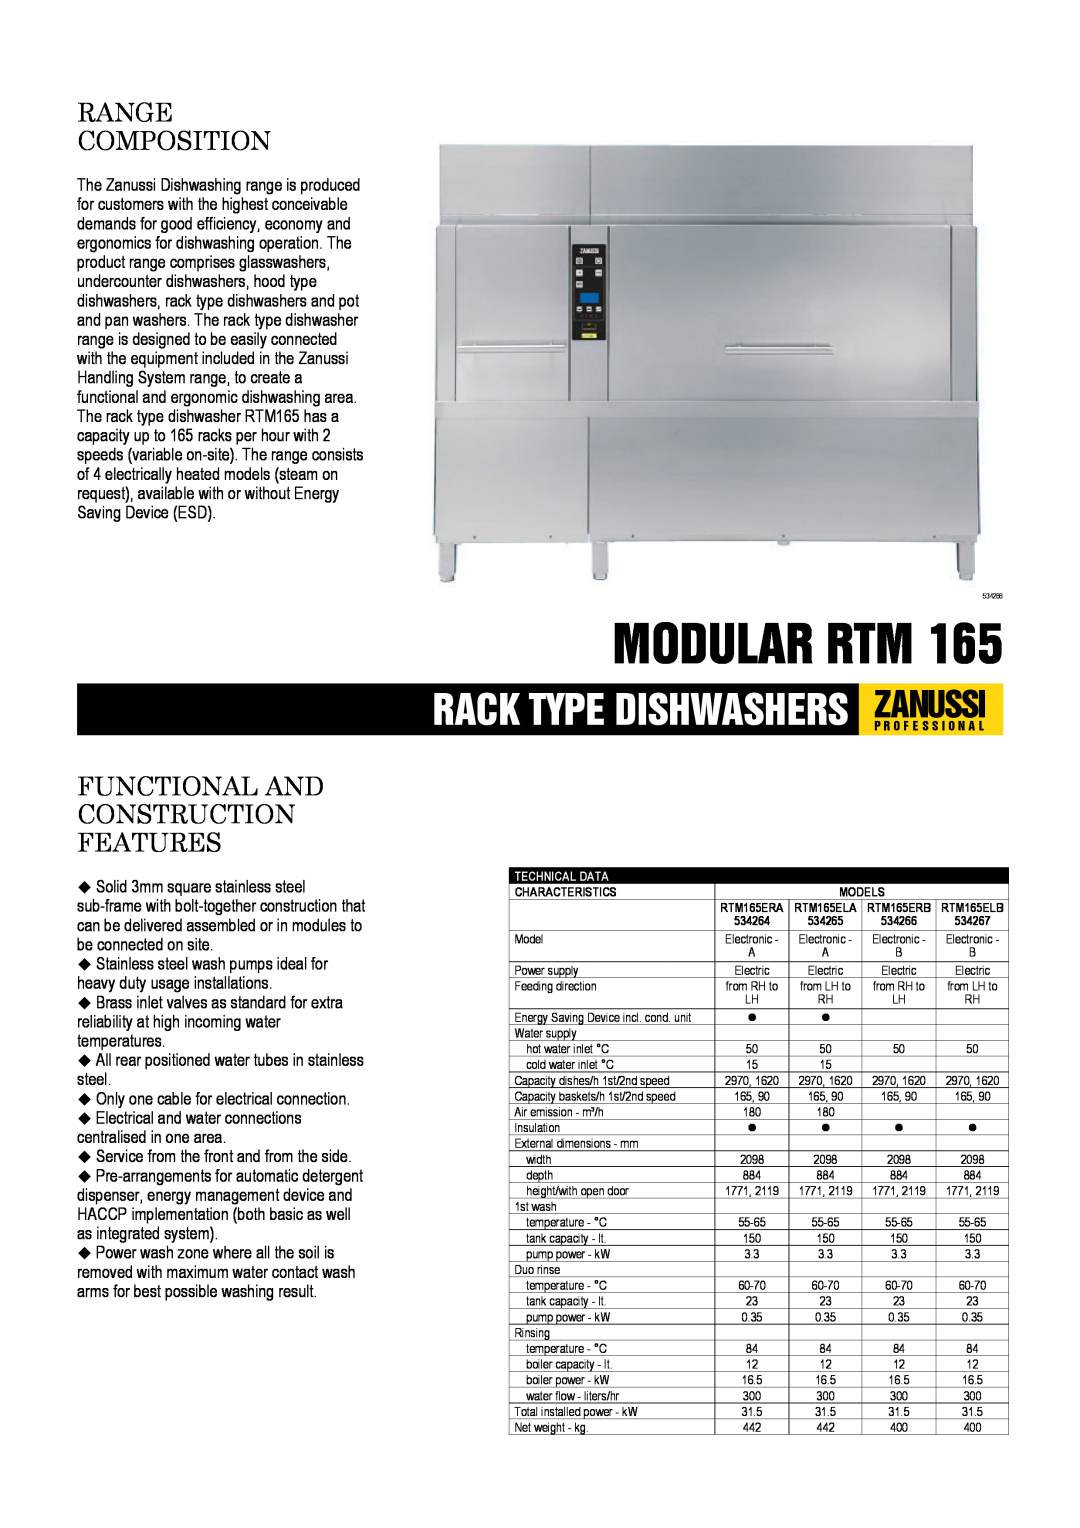 Zanussi RTM165ELA, RTM165ELB, RTM165ERB dimensions Modular Rtm, Range Composition, Functional And Construction Features 